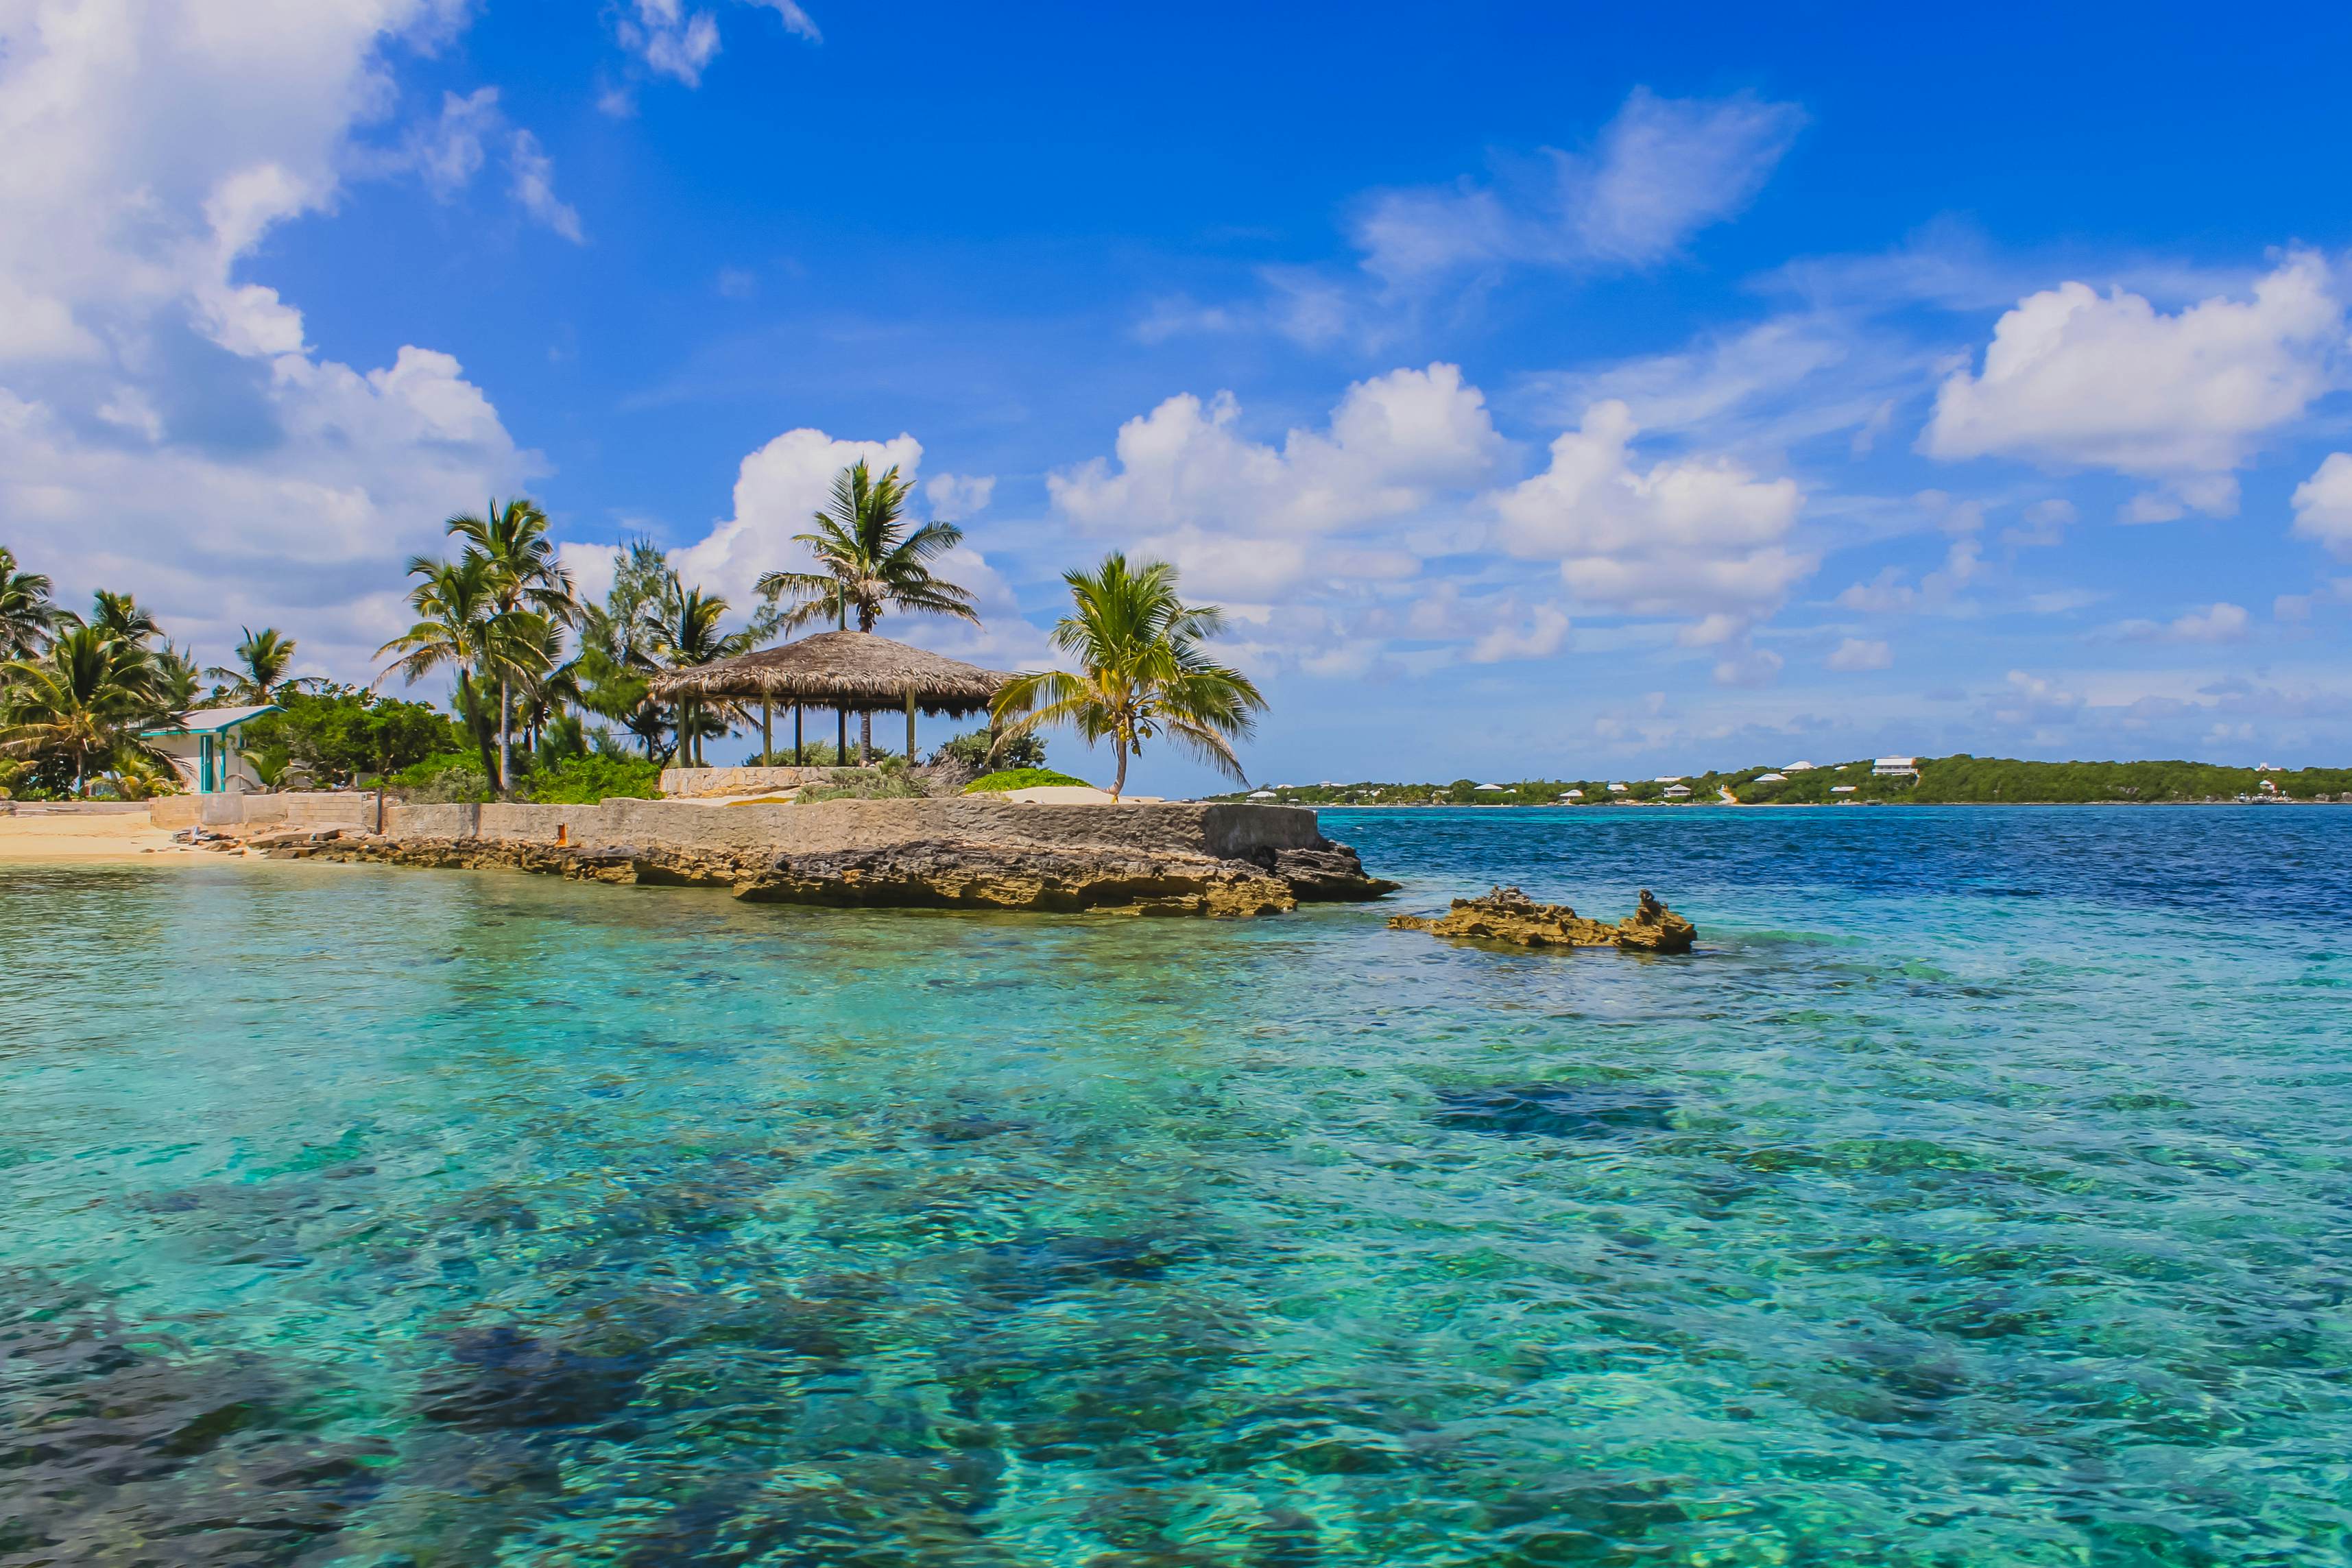 The Bahamas Islands - Discover 16 Unique Island Destinations